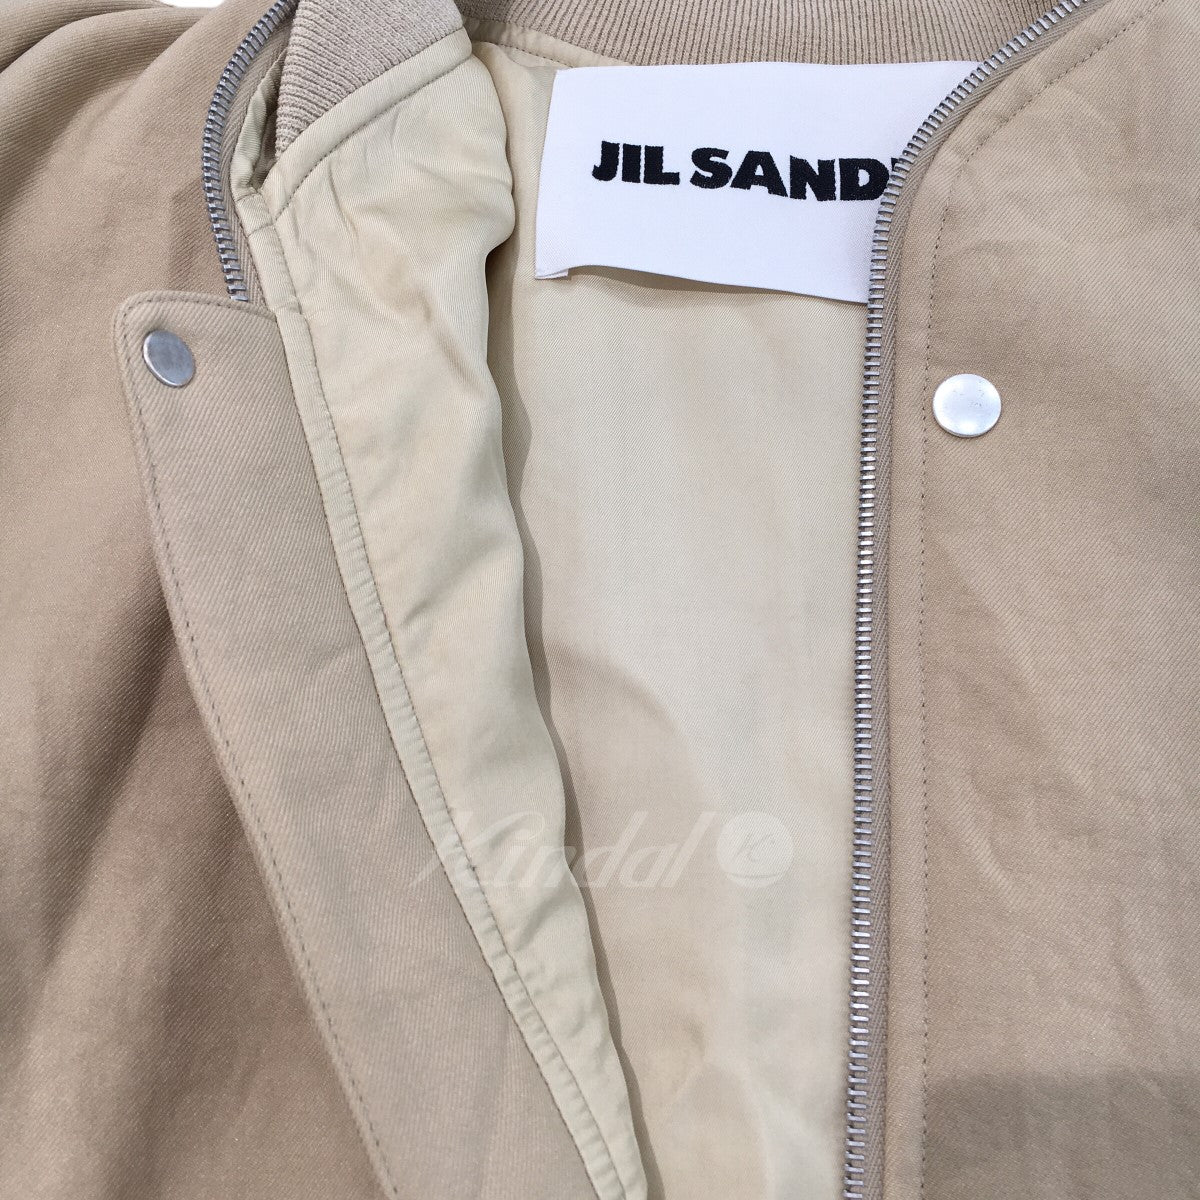 JIL SANDER(ジルサンダー) 2021AW ロングボンバージャケットコート